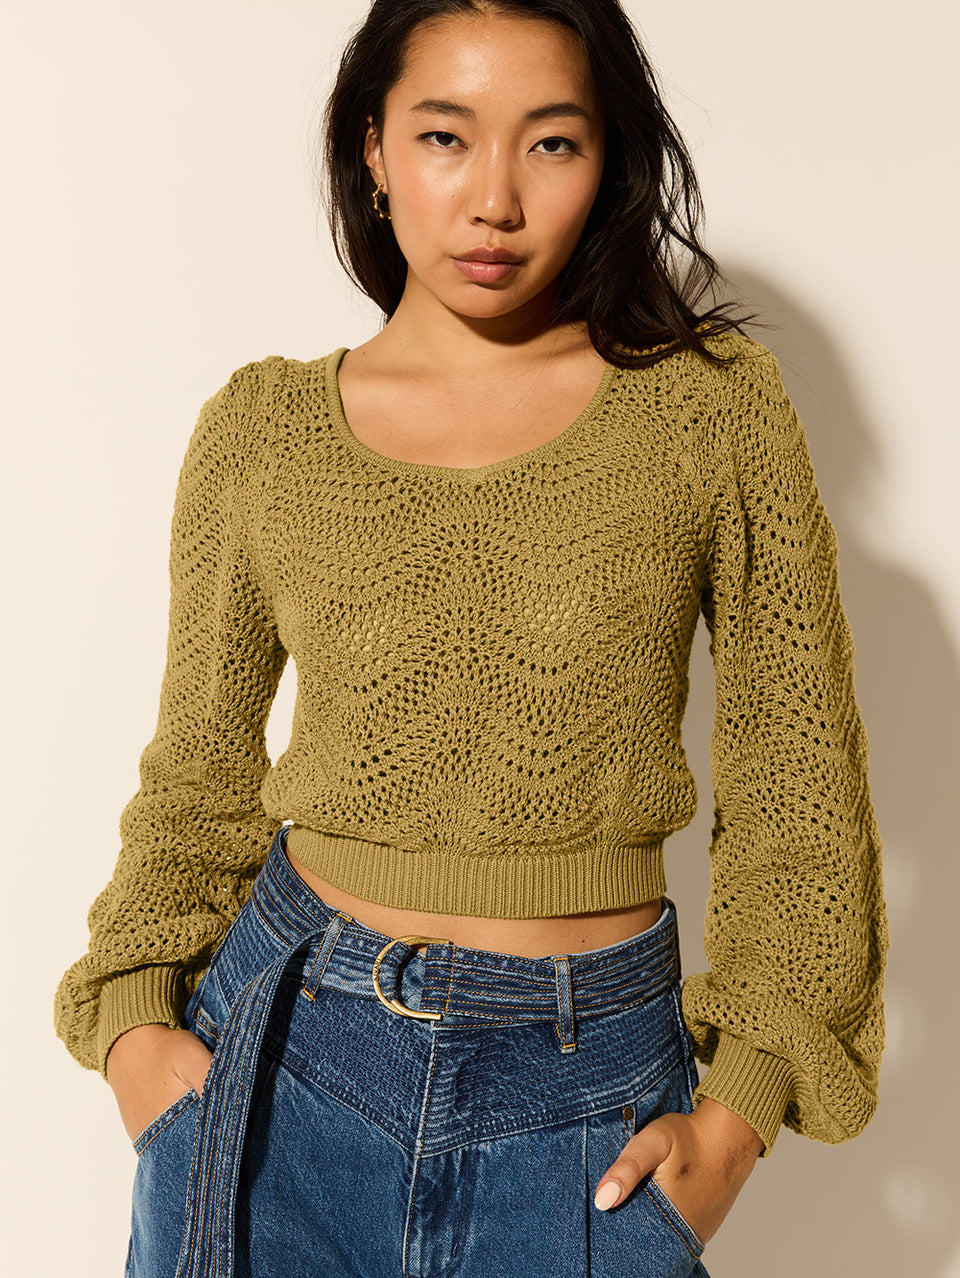 Mariana Knit Top Khaki KIVARI | Model wears khaki knit top